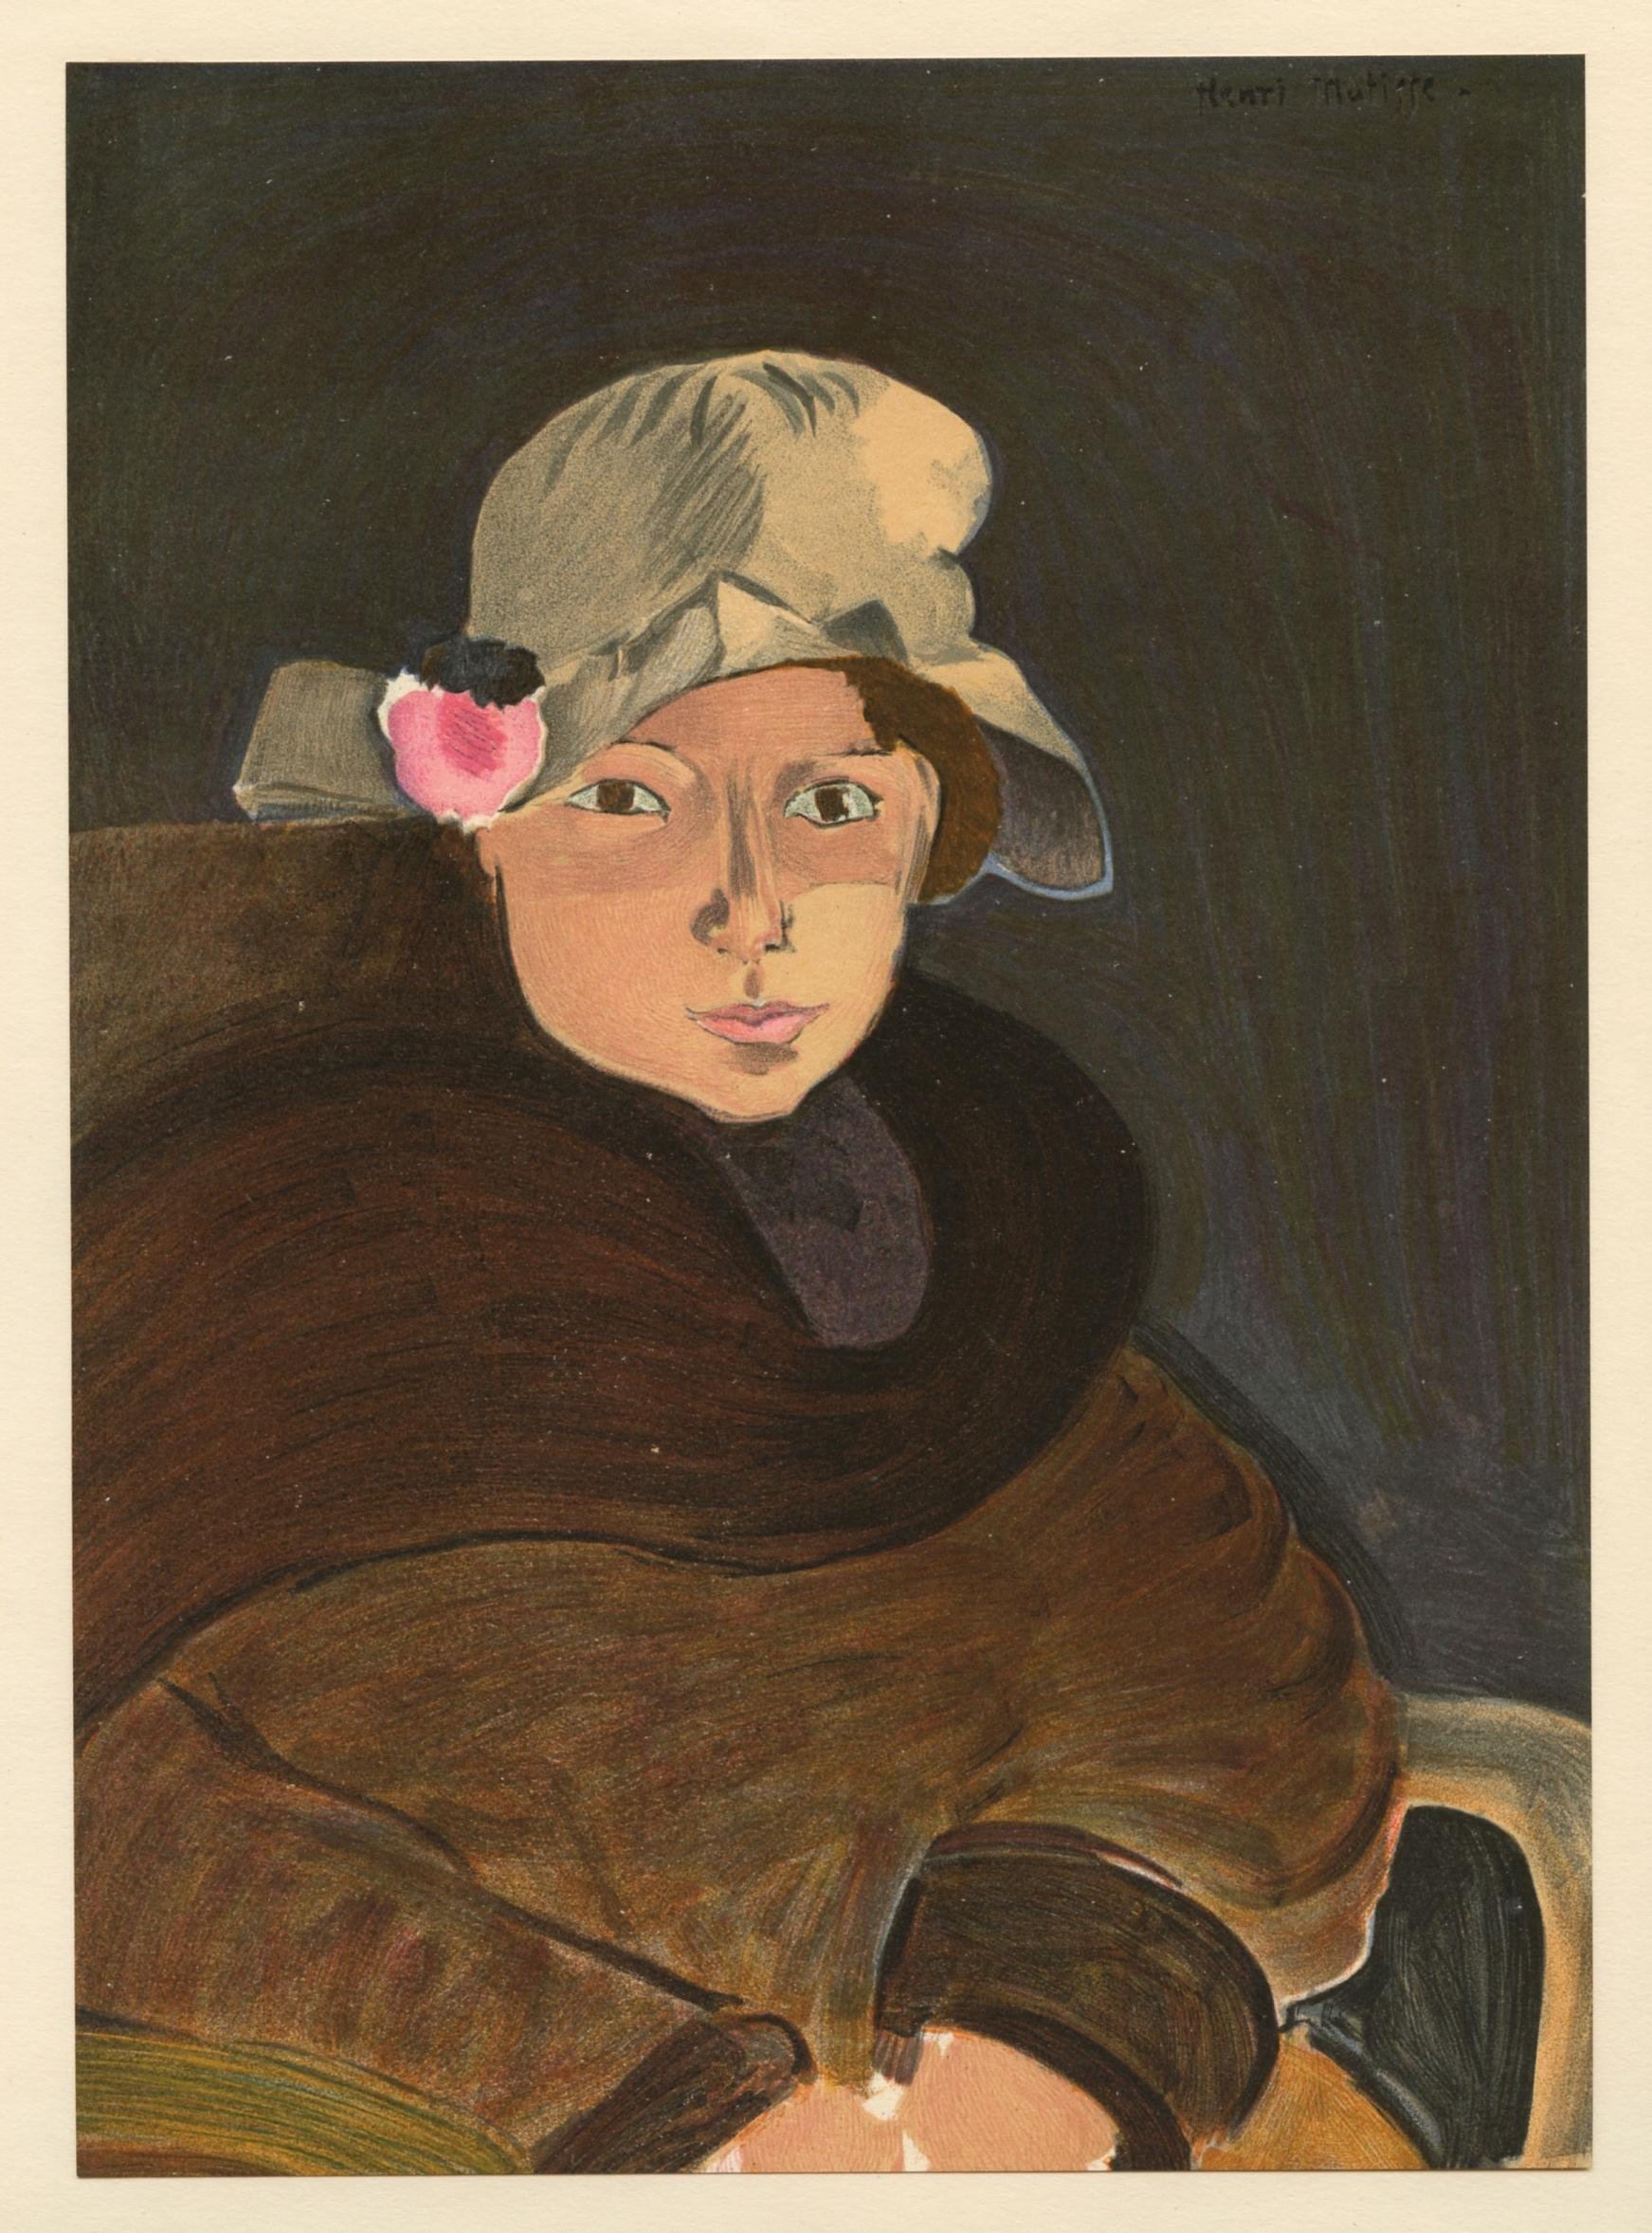 (after) Henri Matisse Portrait Print - "Marguerite Matisse" lithograph